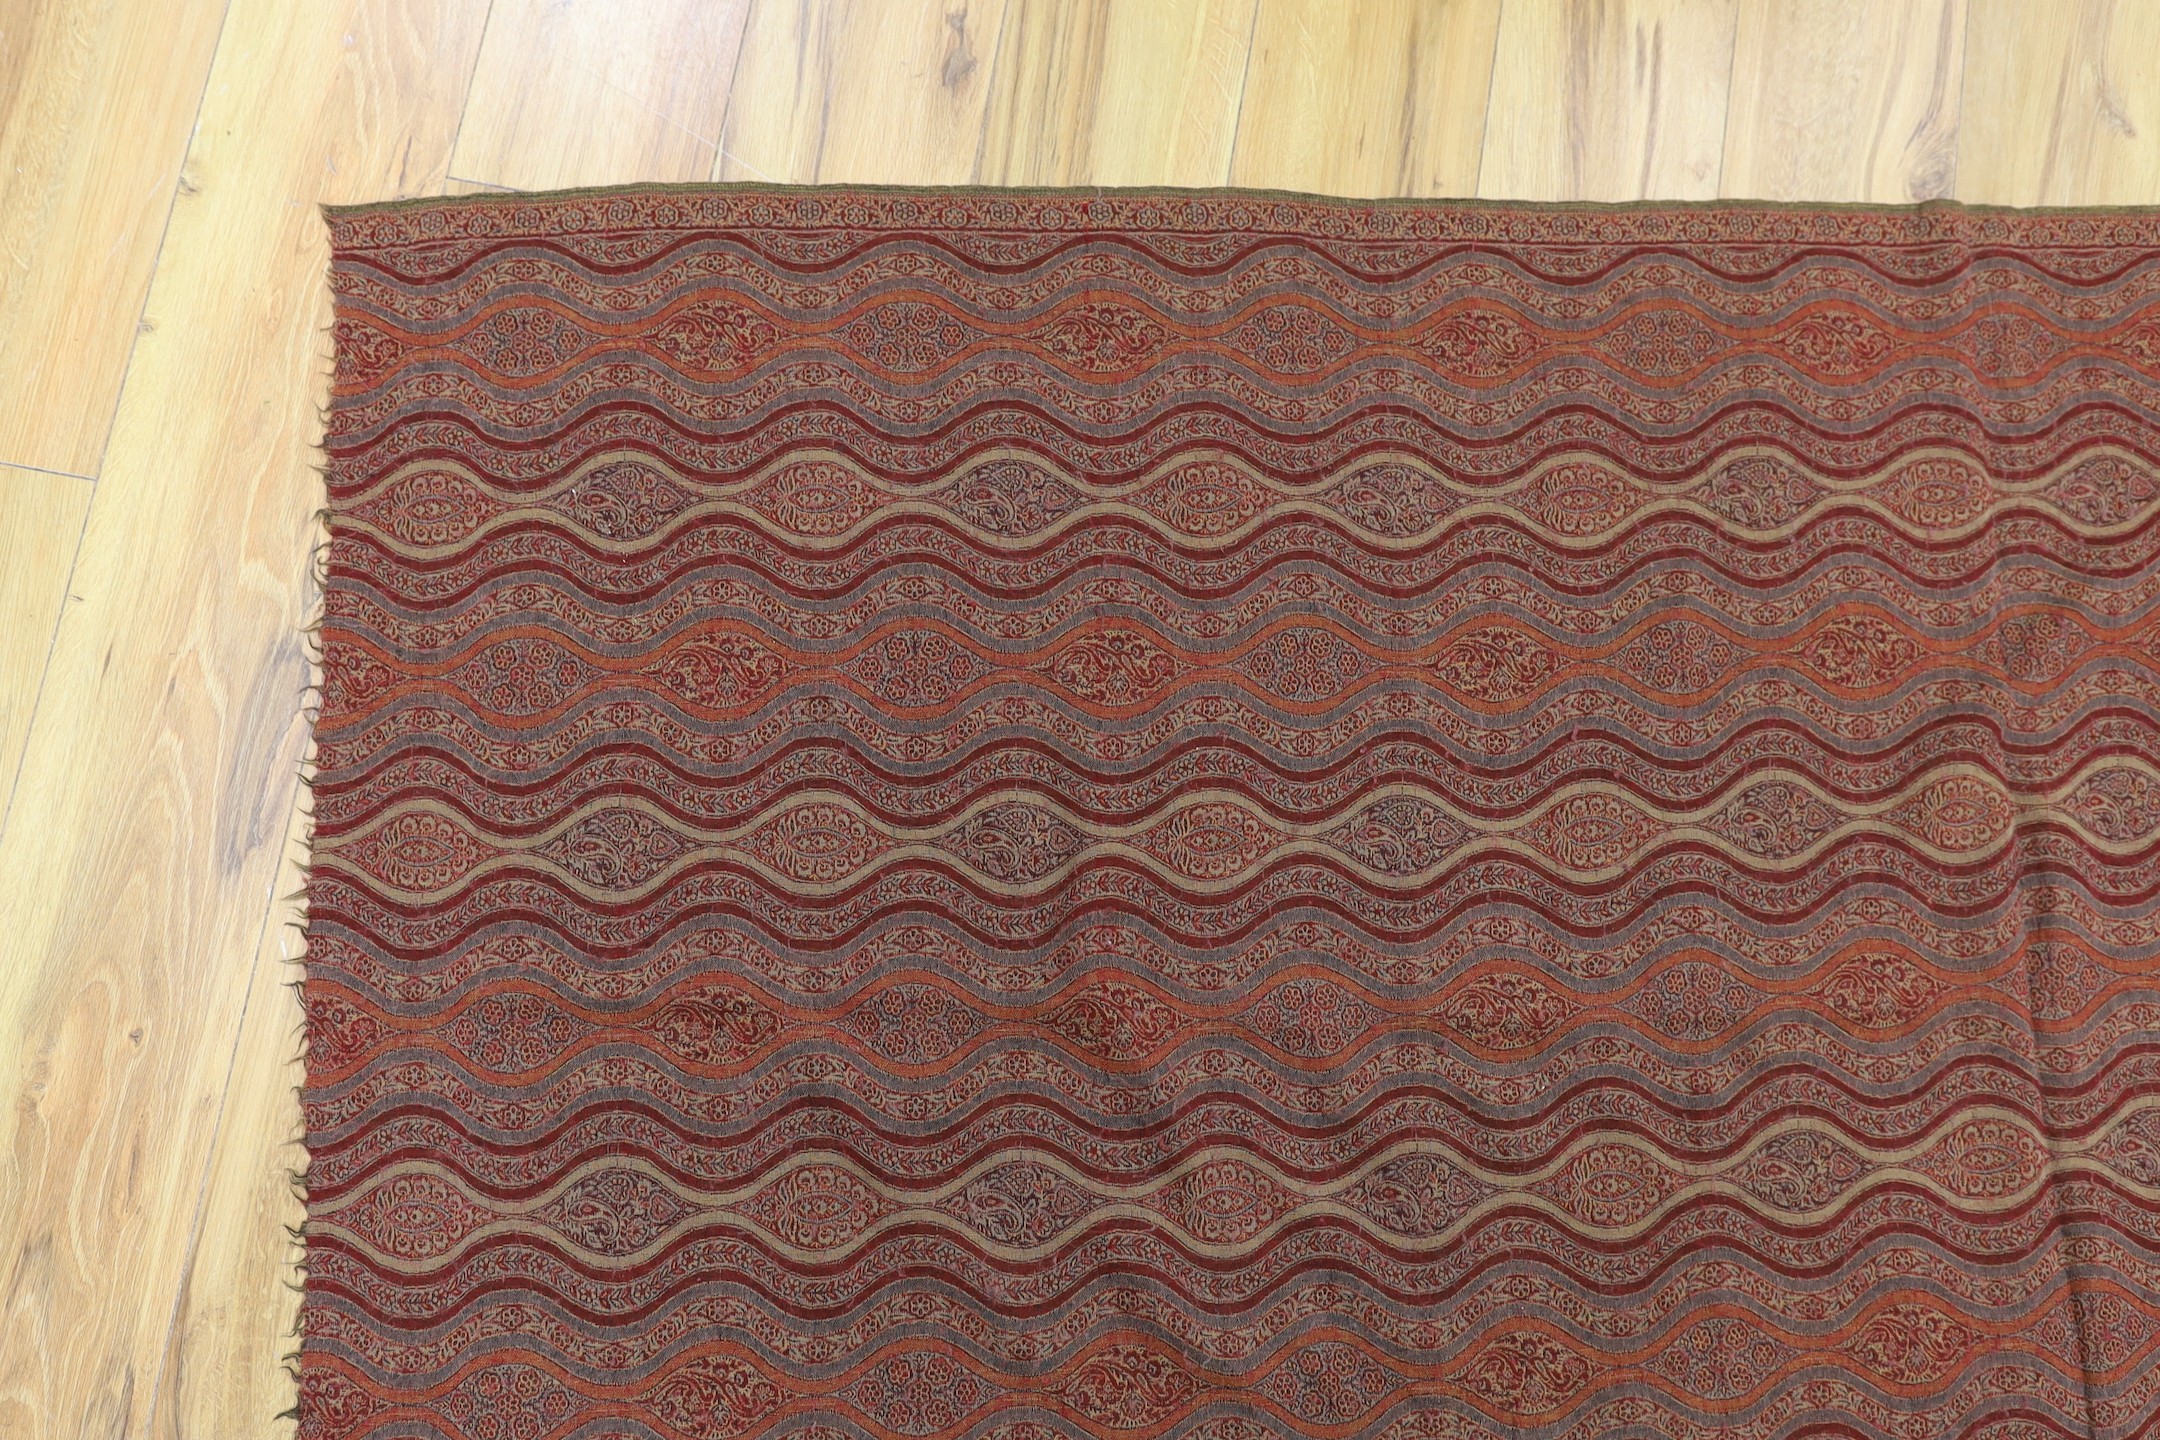 An Indian paisley shawl, 200 cms x 104cms